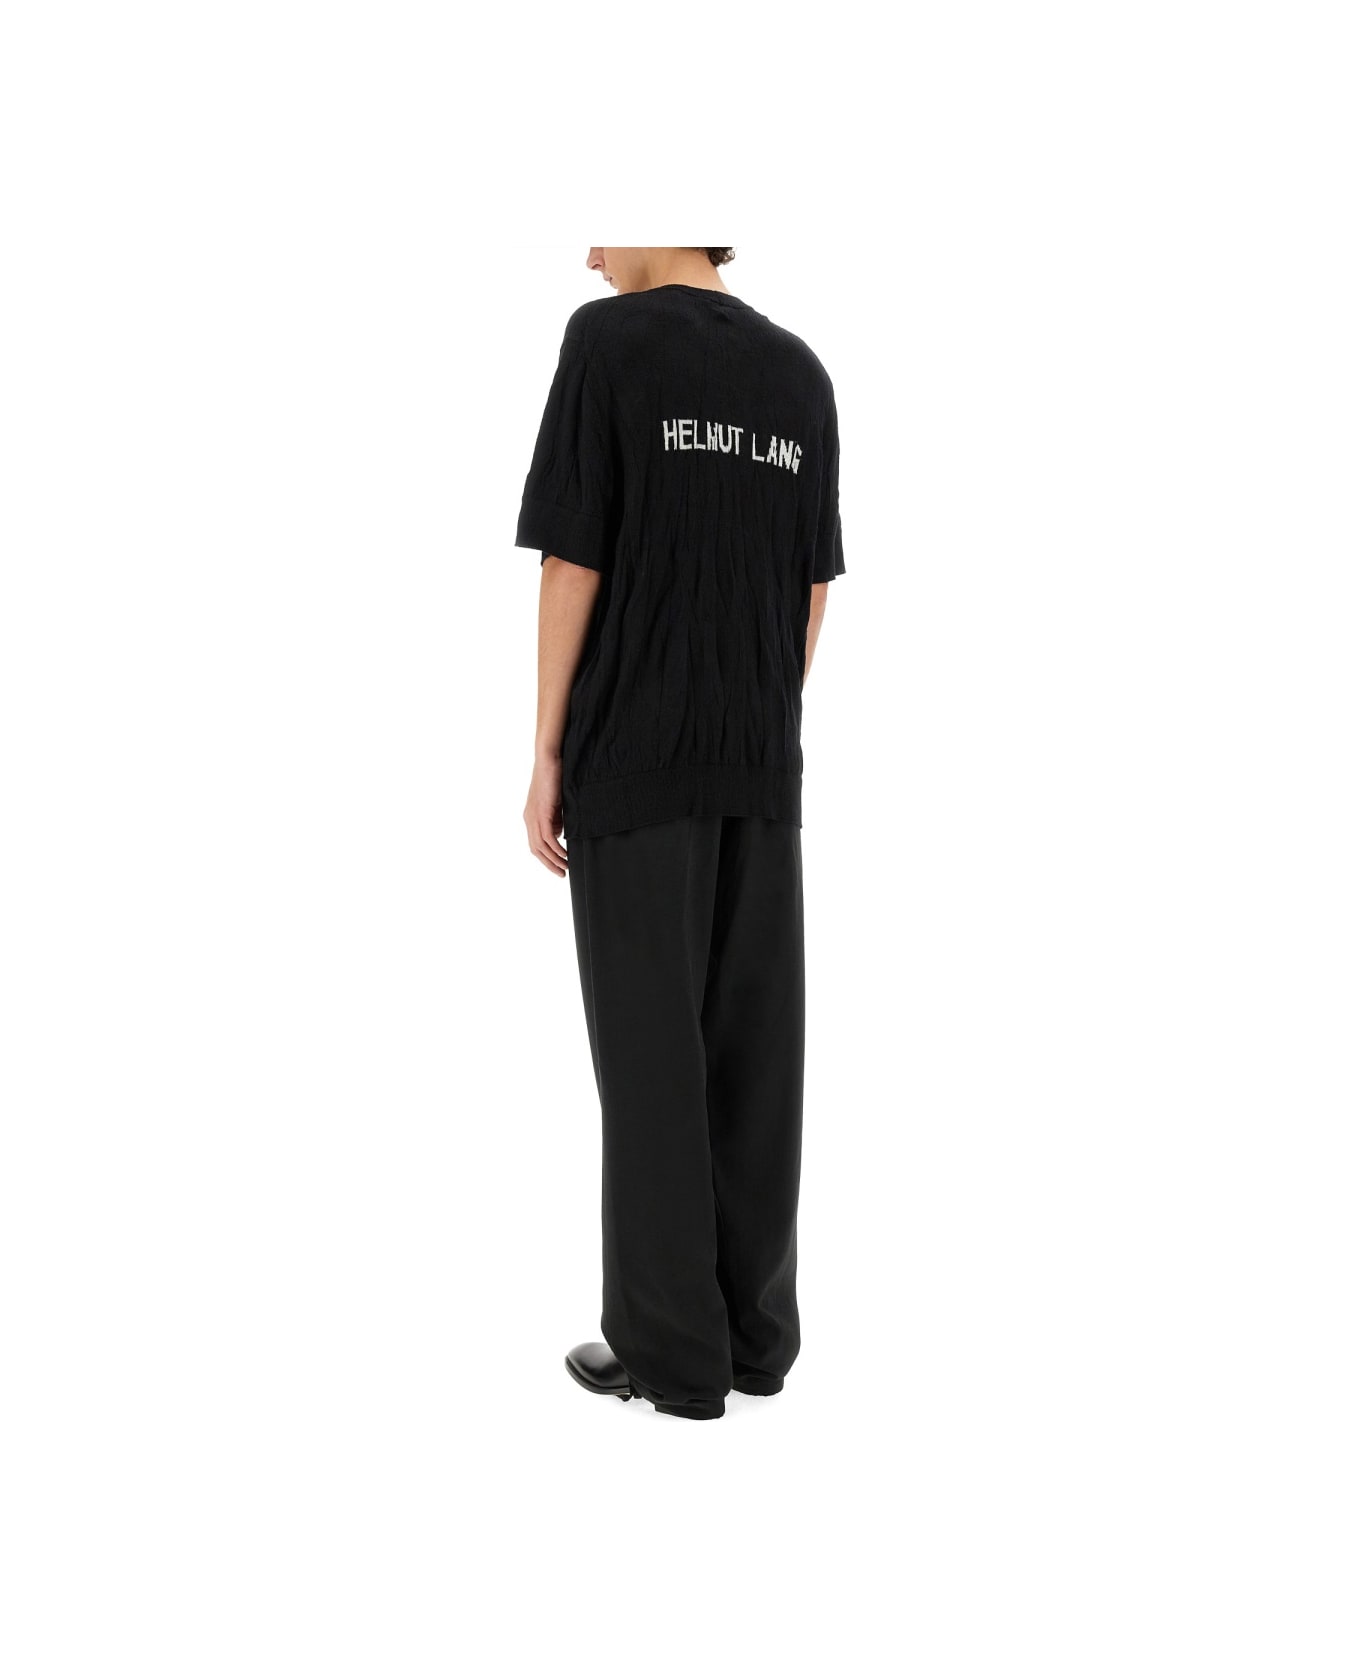 Helmut Lang Crushed Shirt - BLACK